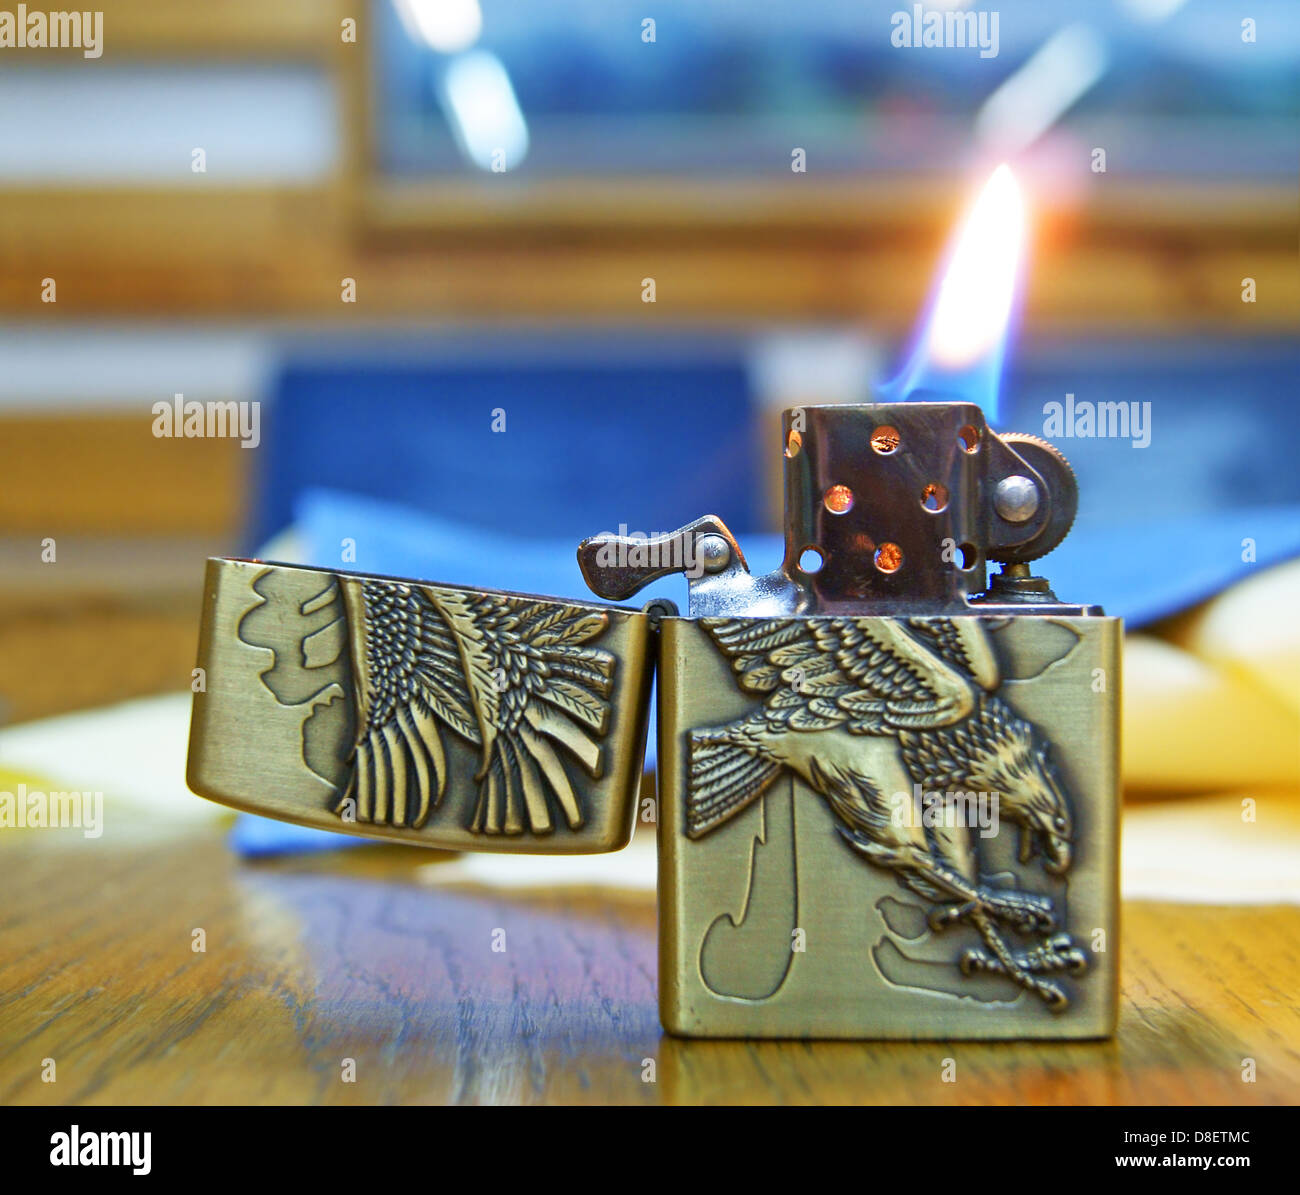 A cigarette lighter close-up Stock Photo